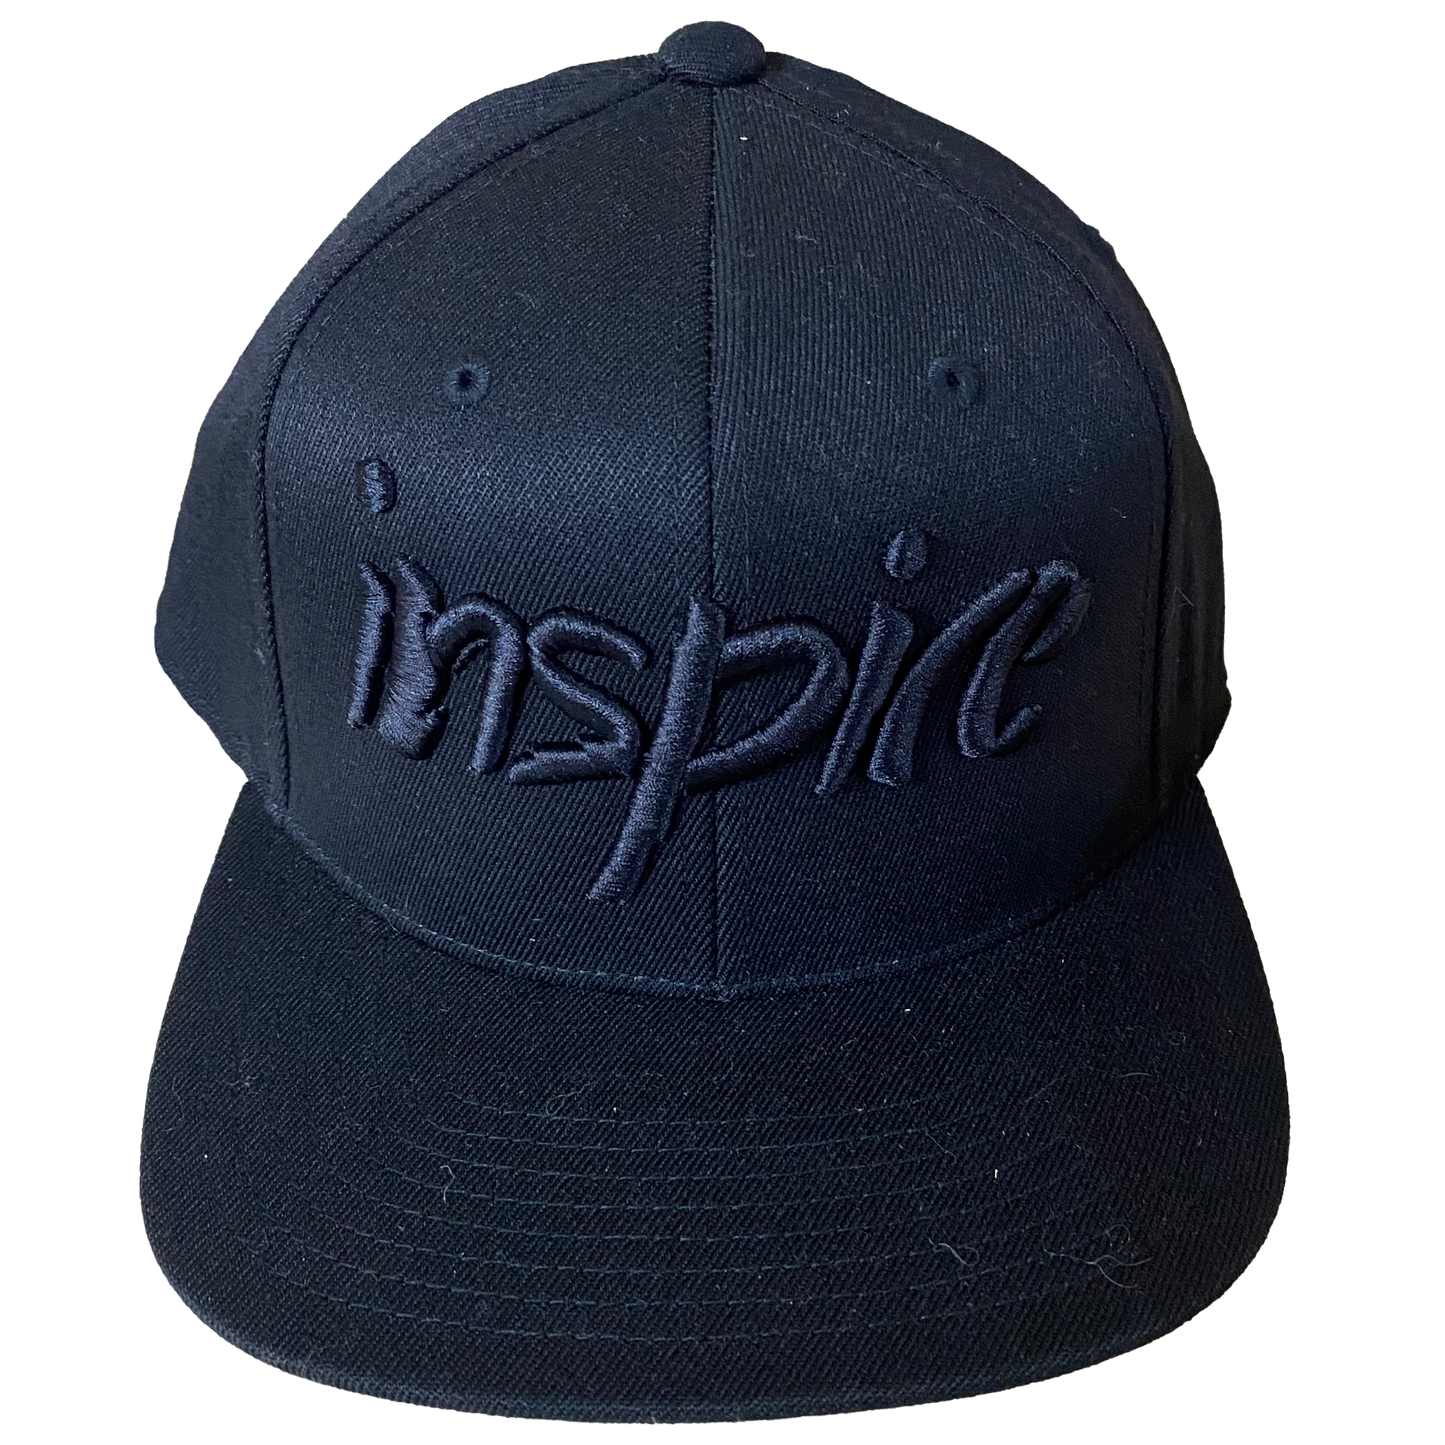 Inspire 110 Snapback Hat